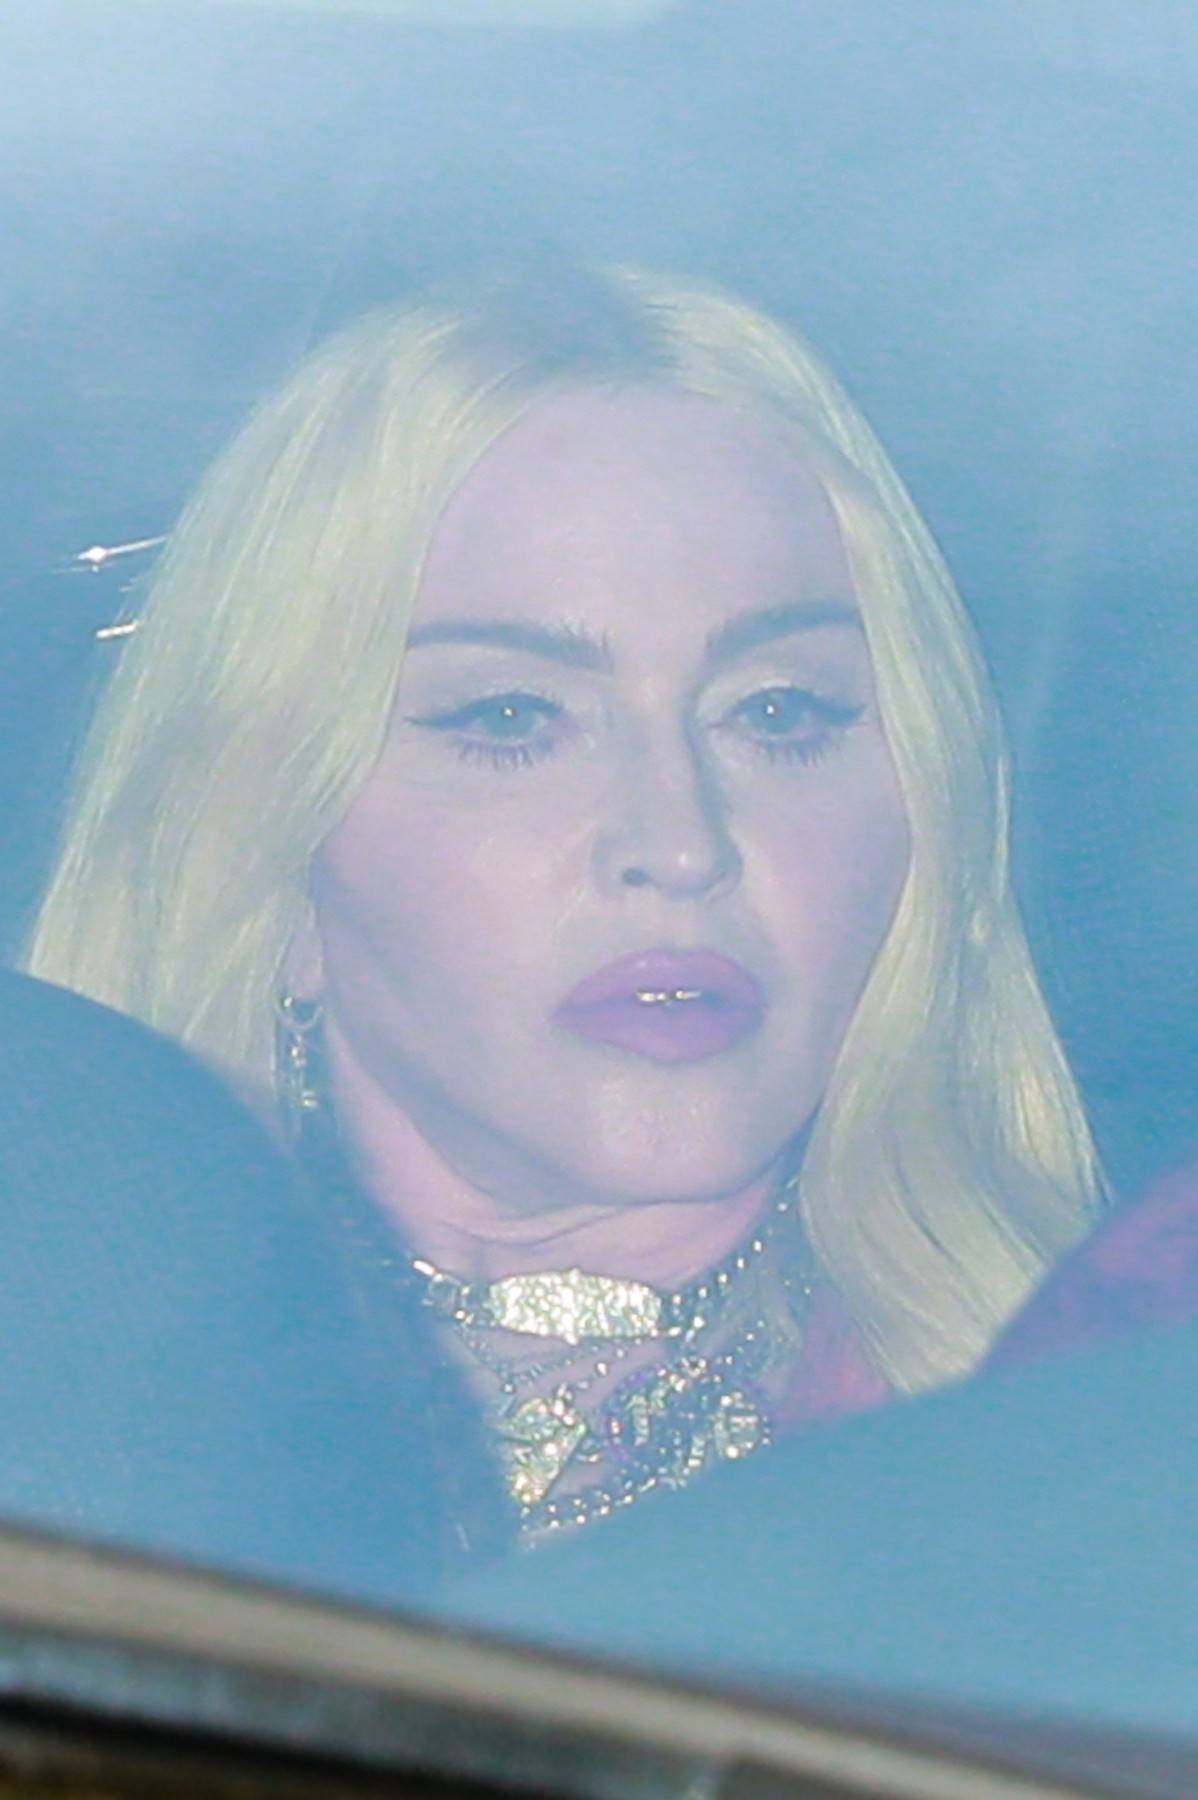 *PREMIUM-EXCLUSIVE* Madonna attends Britney Spears and Sam Asghari’s wedding